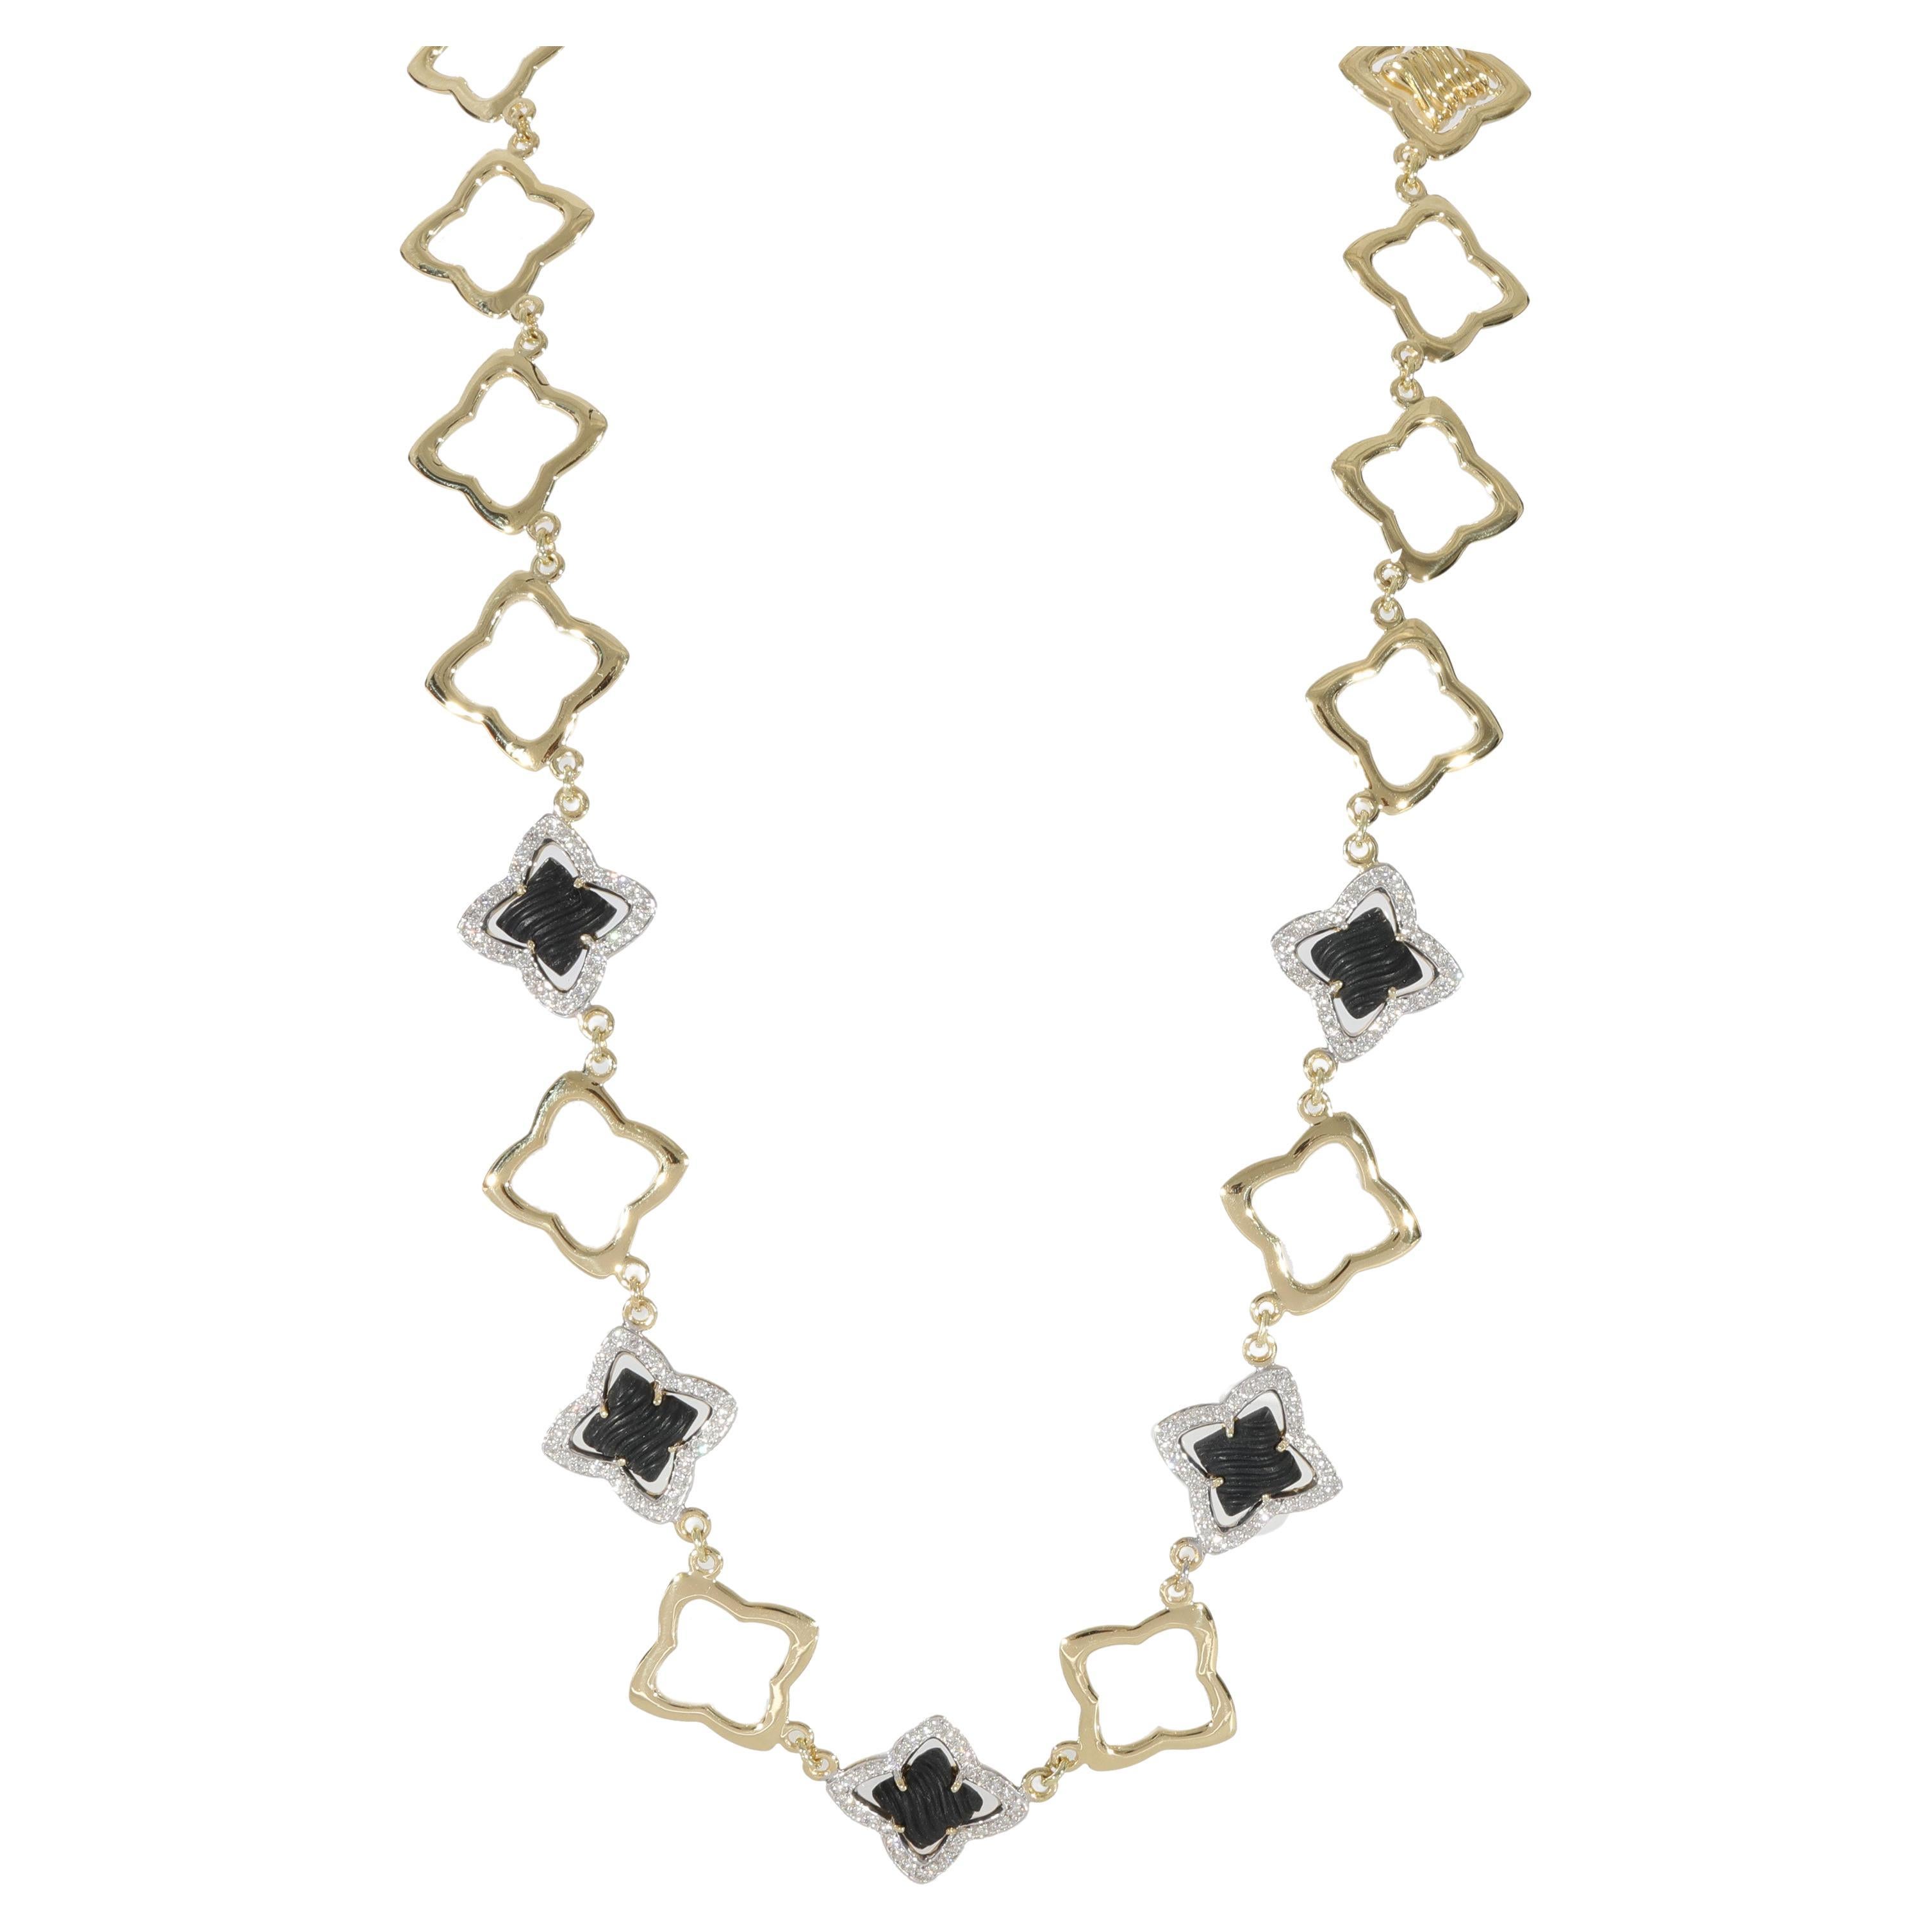 David Yurman Quadrofoil Onyx Diamond Necklace in 18k Yellow Gold 1.75 CT